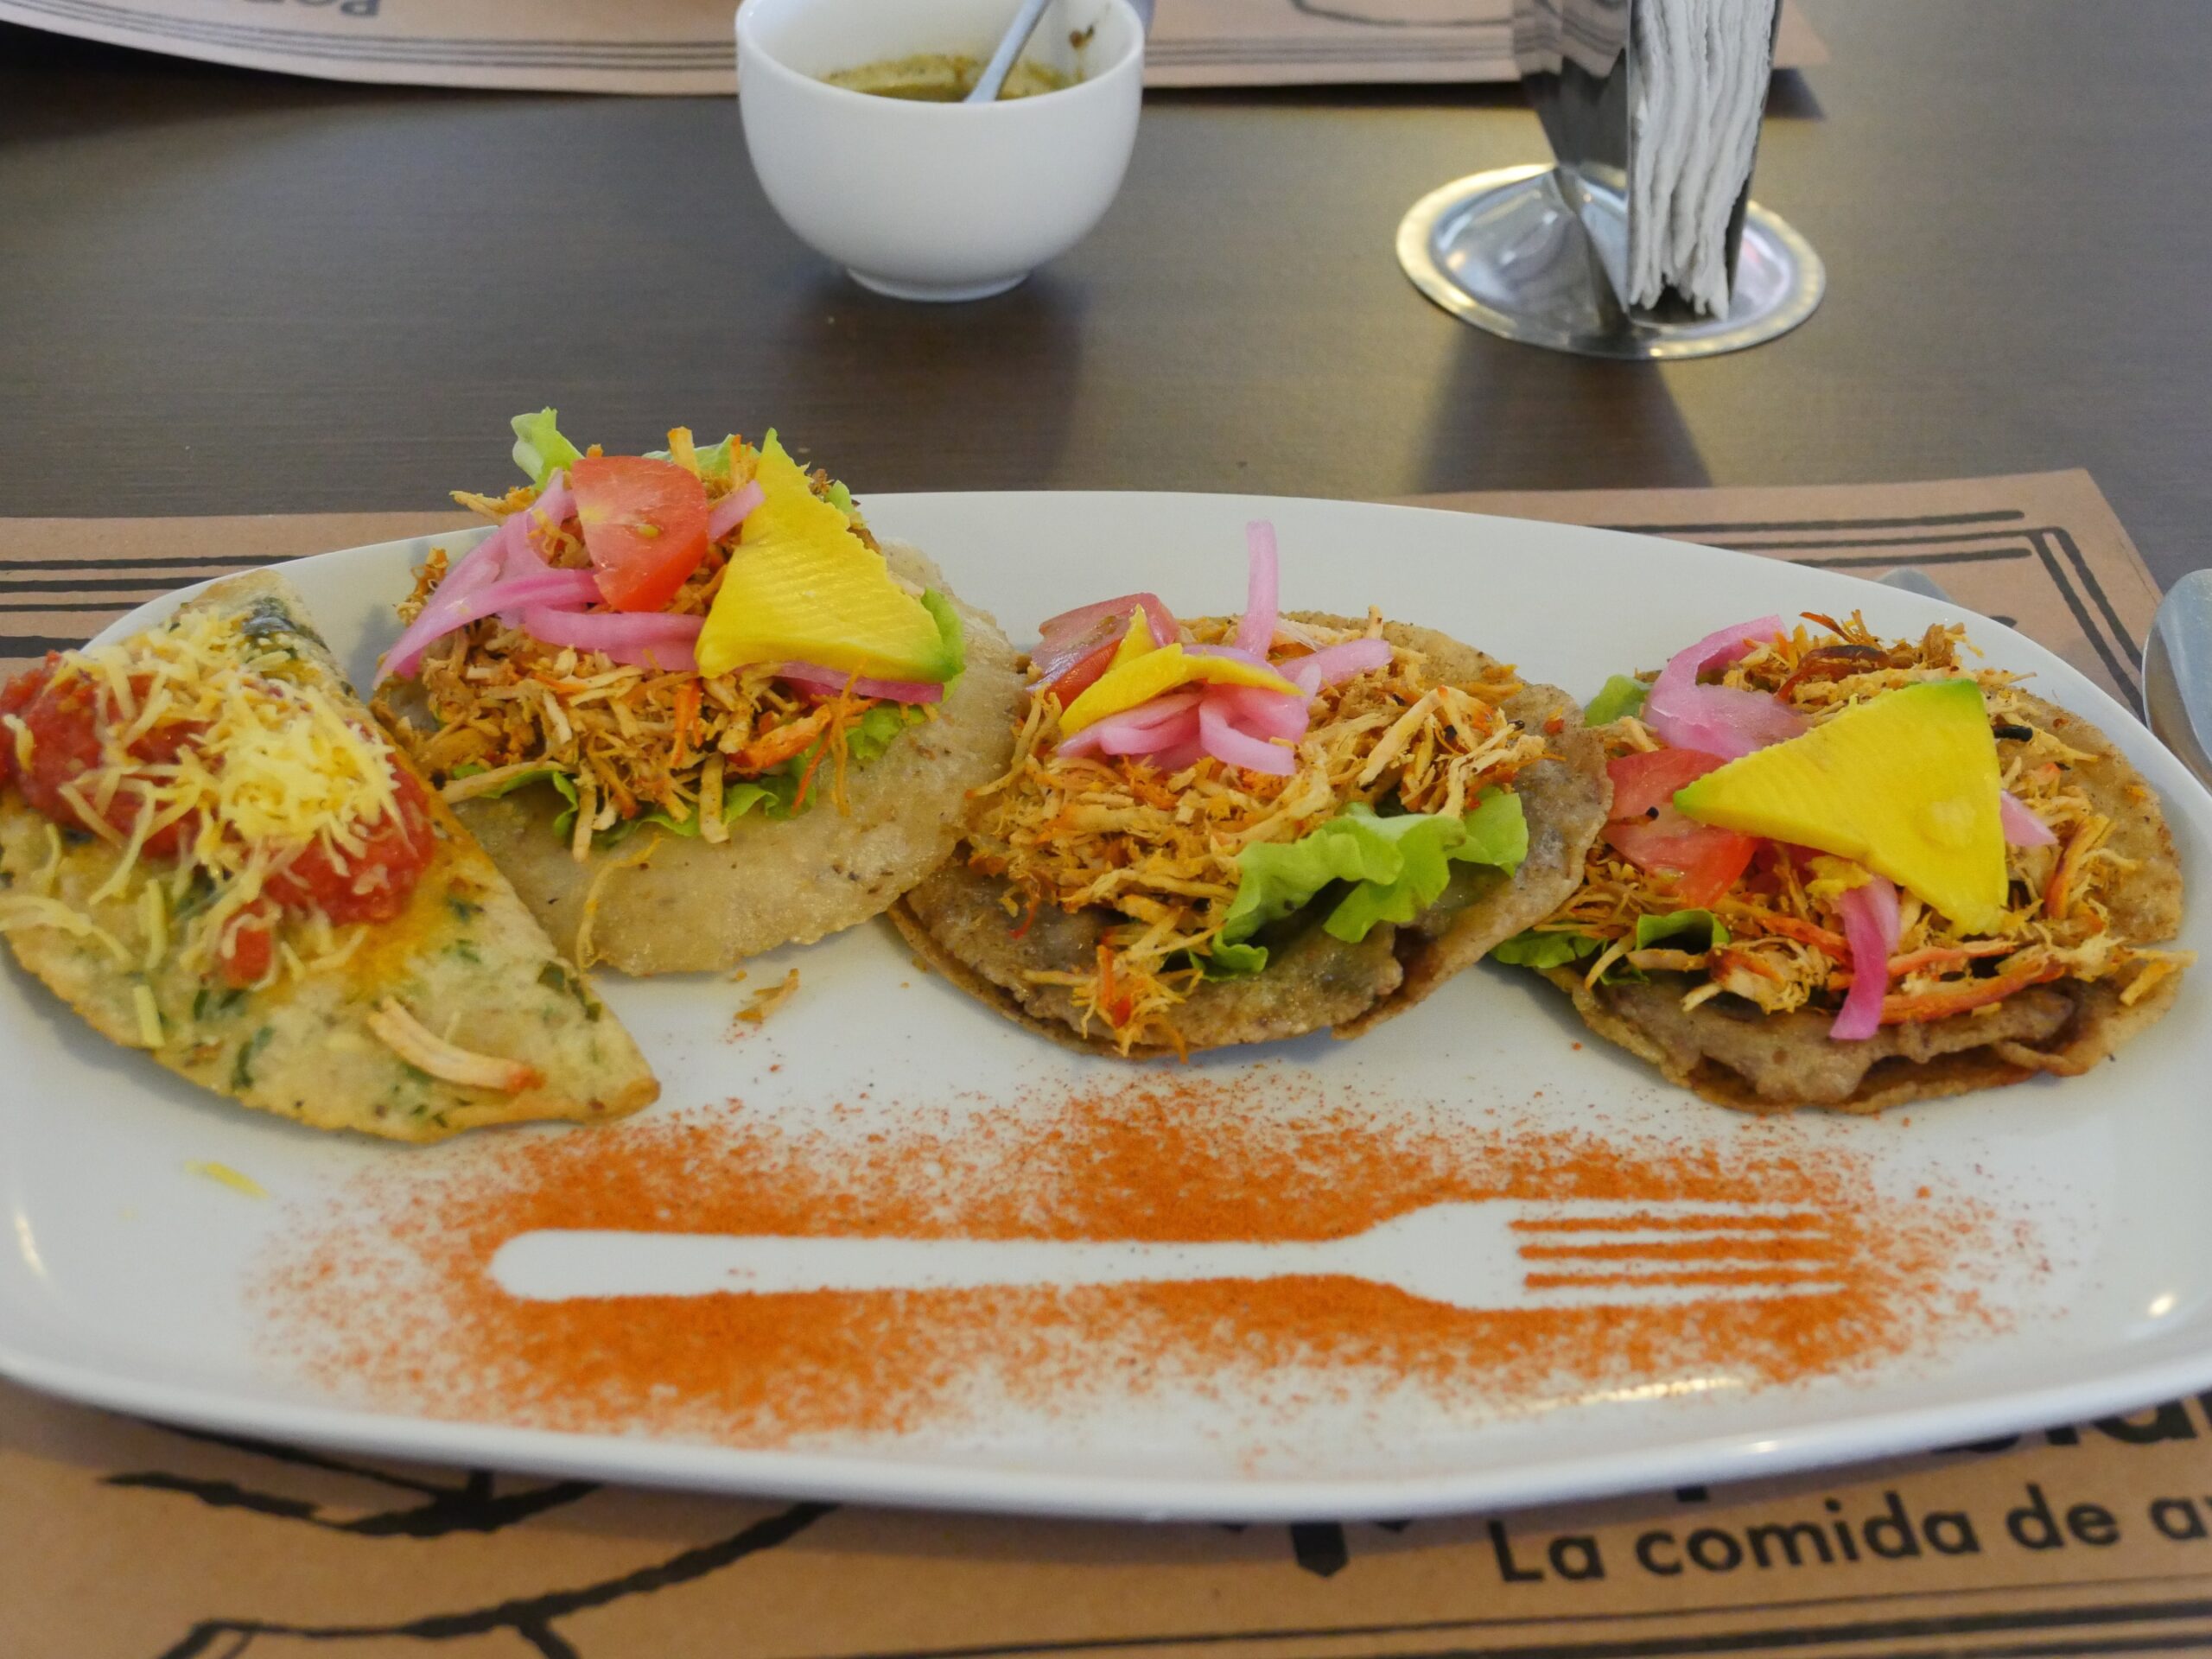 Mouth-watering empanadas, panuchos, and salbutes are served at restaurant Manjar Blanco in Mérida, Mexico.